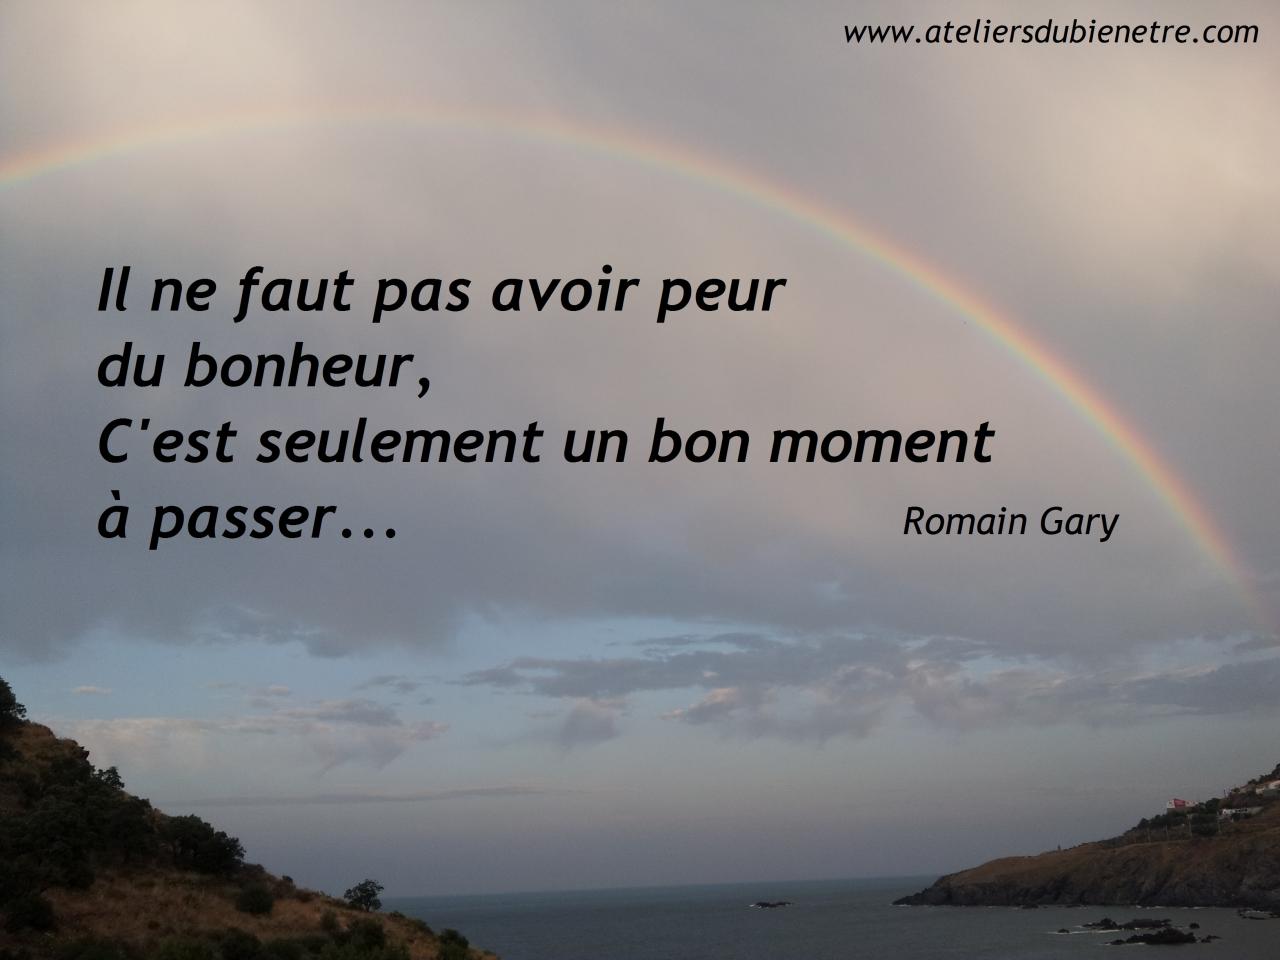 Ateliersdubienetre - Romain Gary